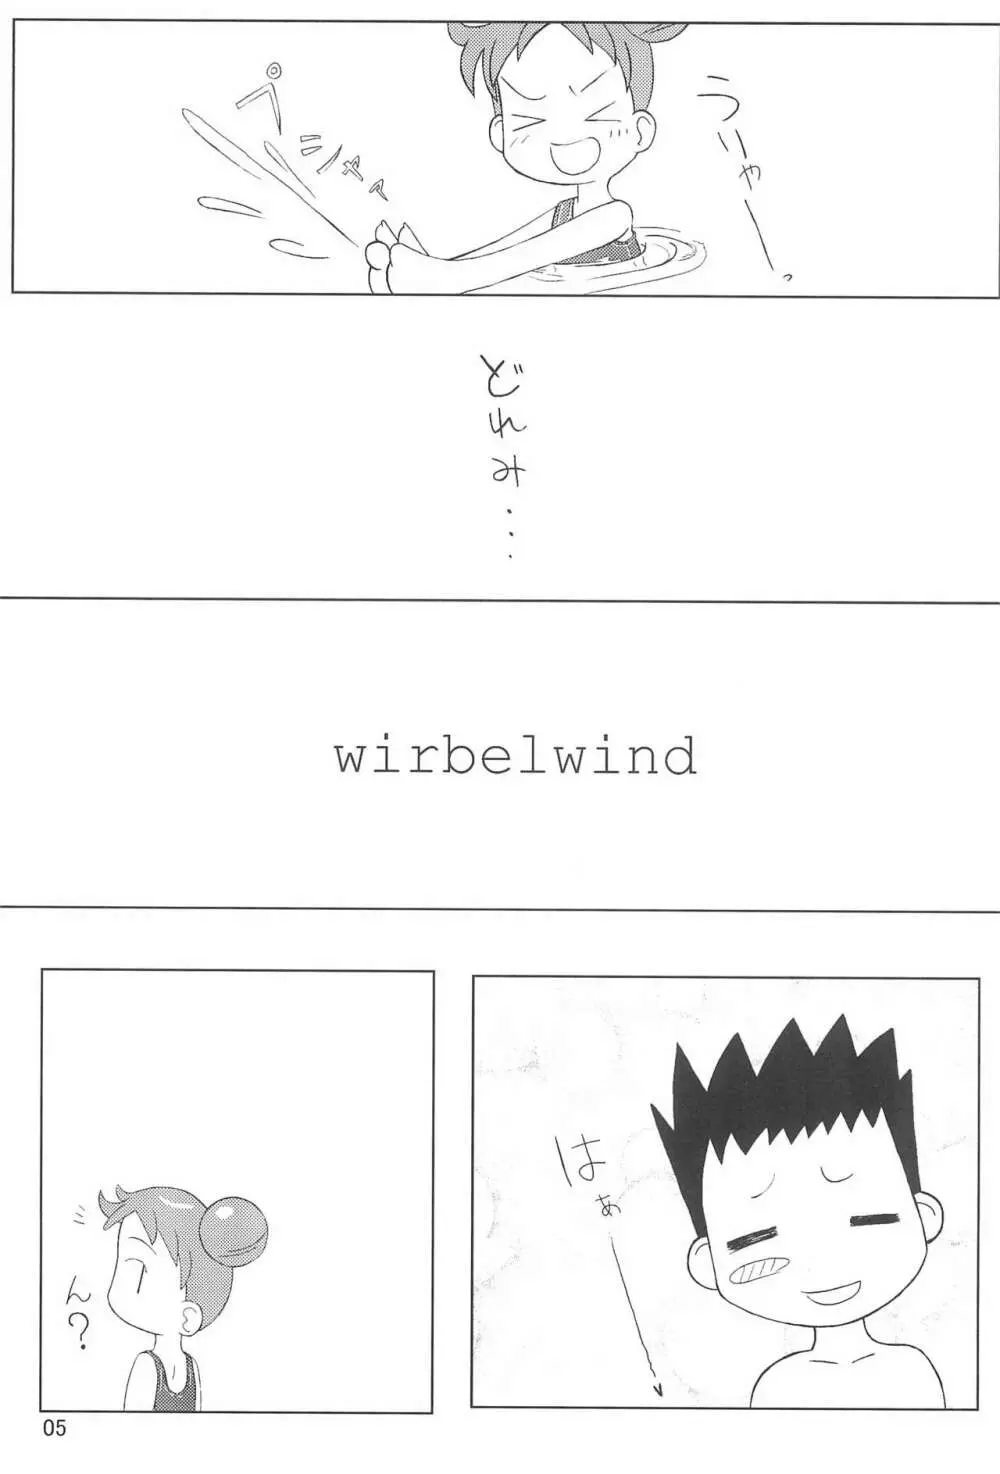 Wirbelwind - page5